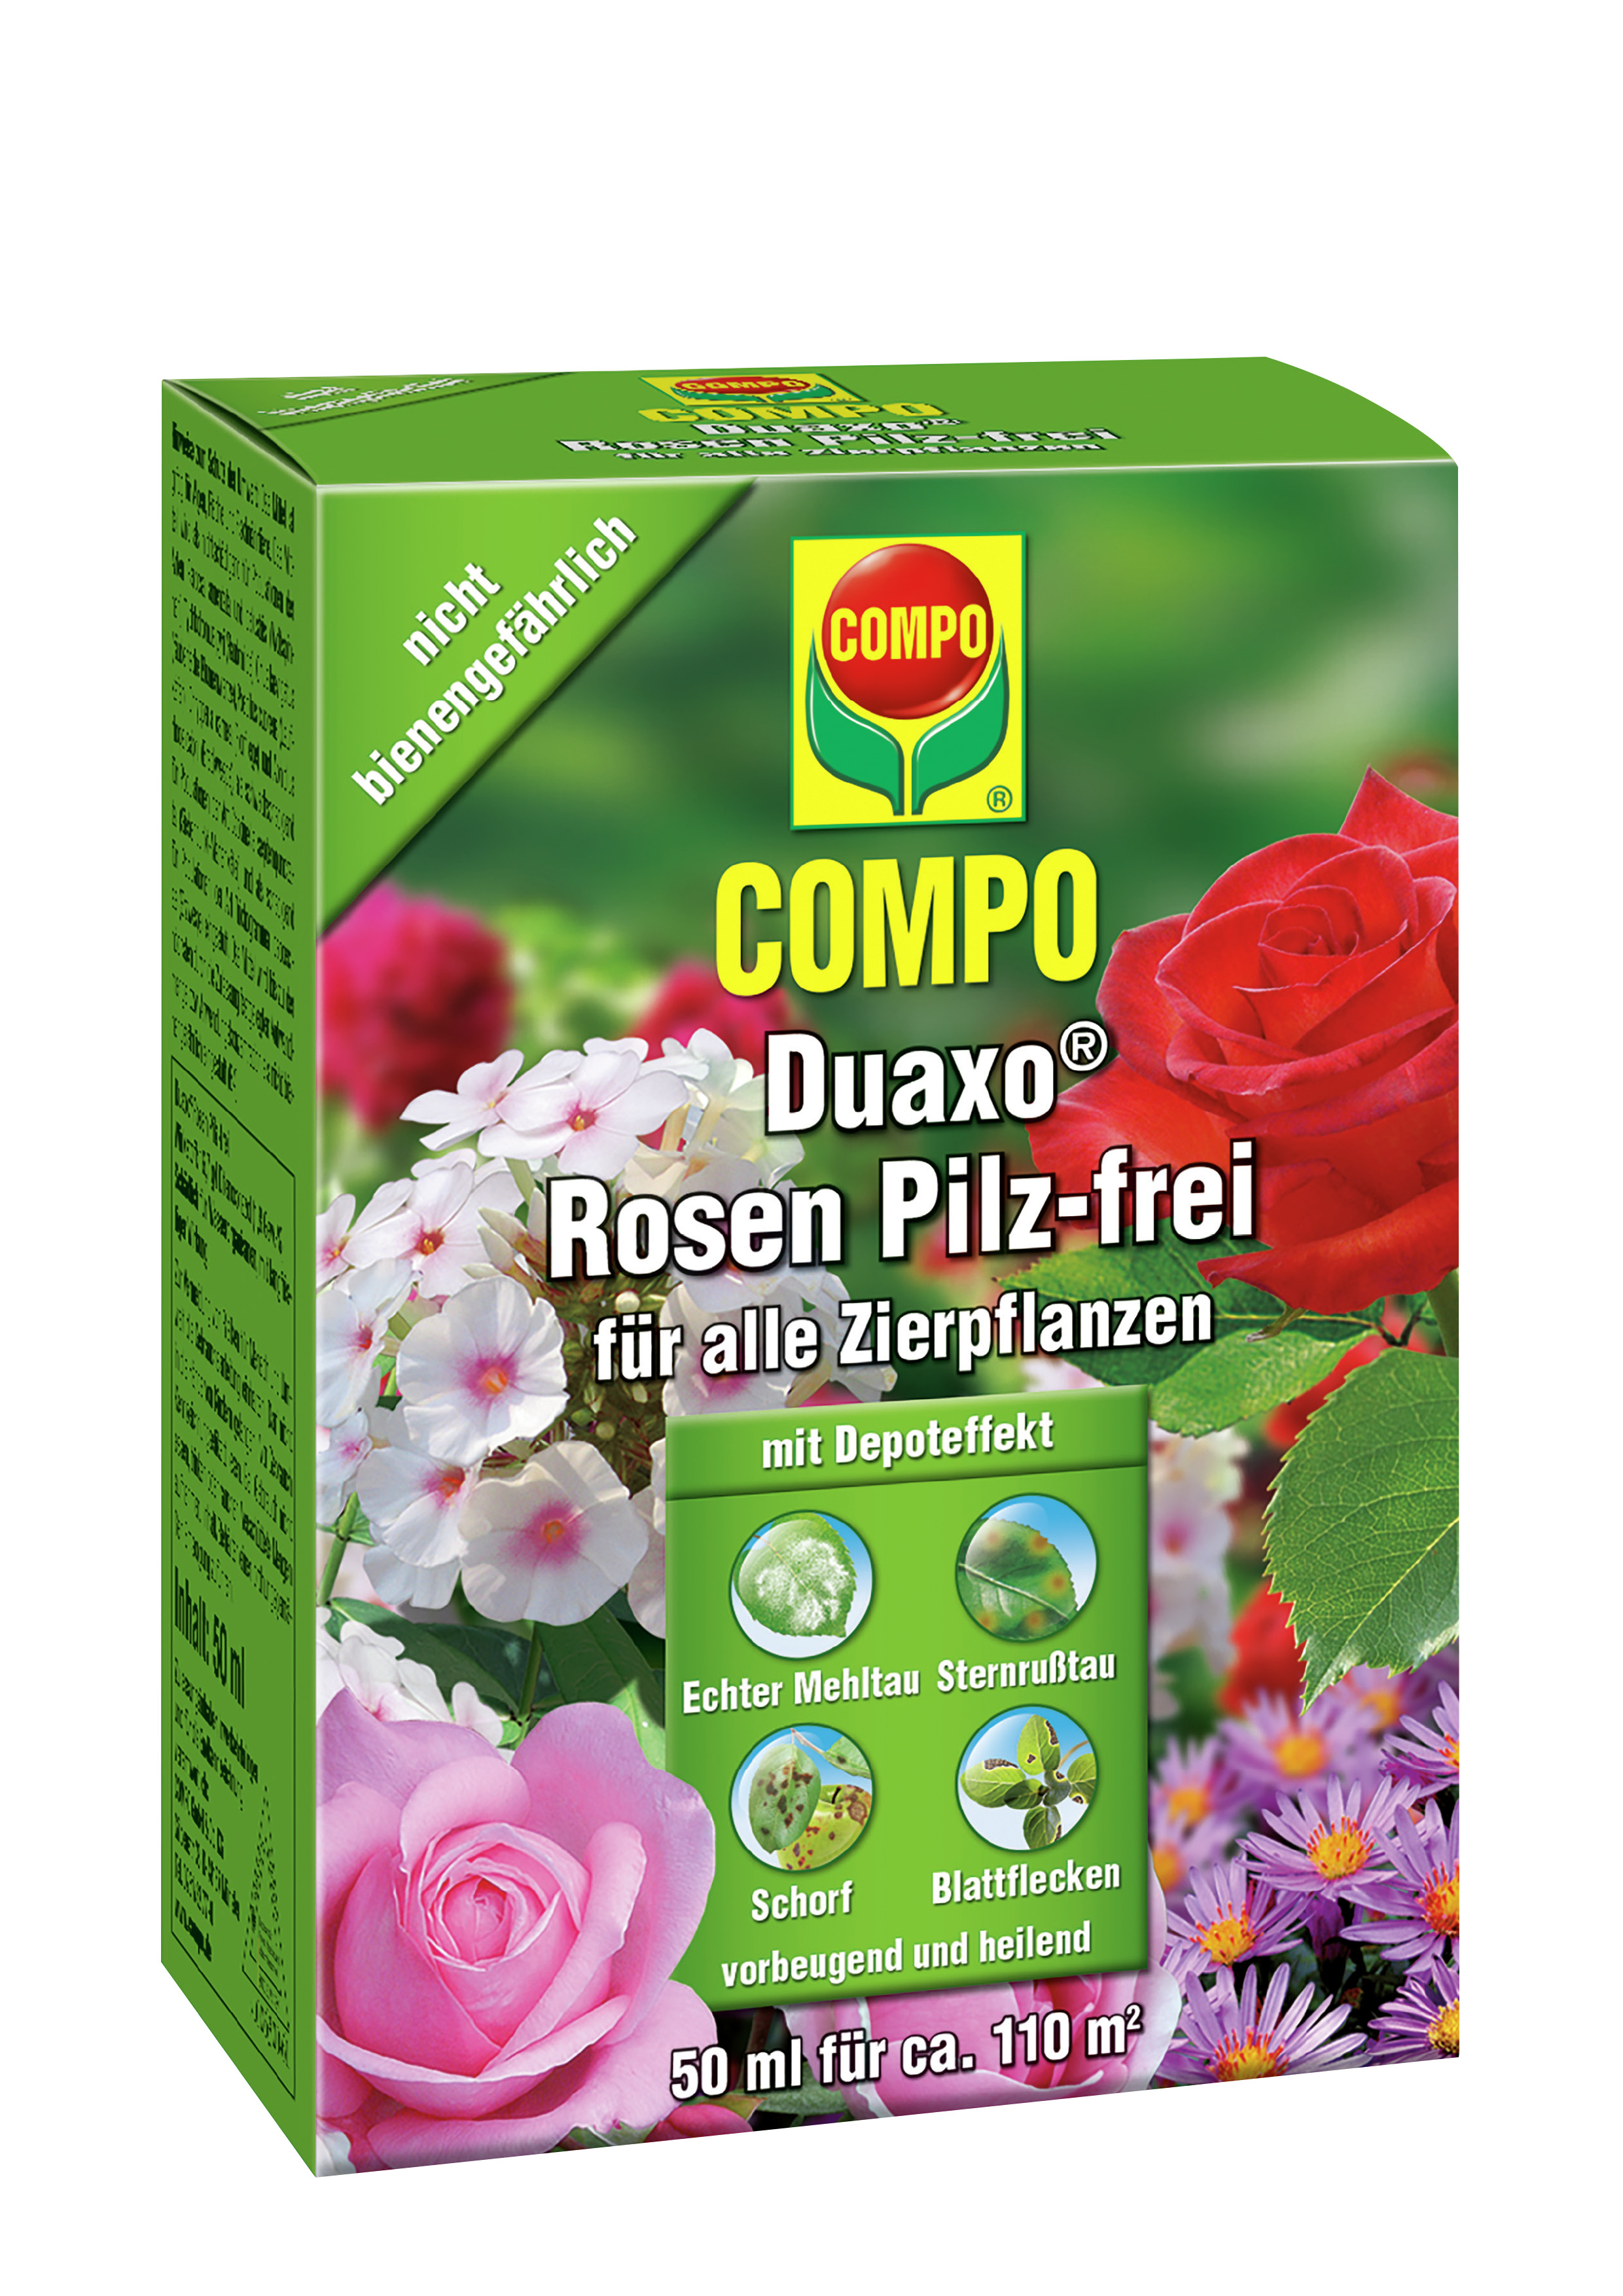 COMPO COMPO Duaxo Rosen Pilz-frei 50ml Compo EREG -B4- für alle Zierpflanzen